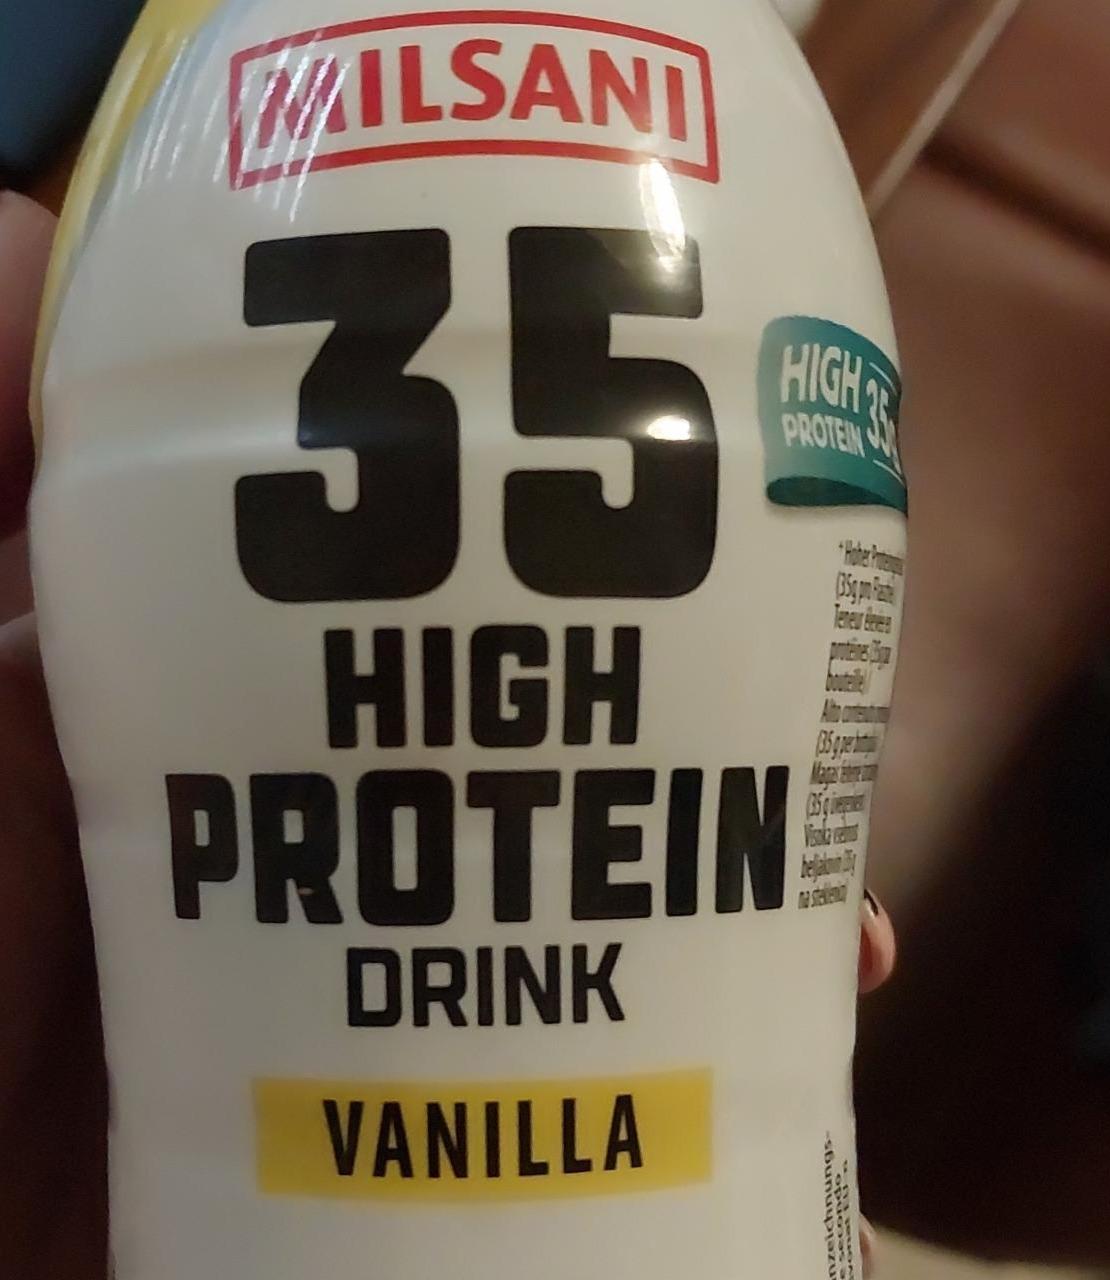 Fotografie - 35 High Protein Drink Vanilla Milsani